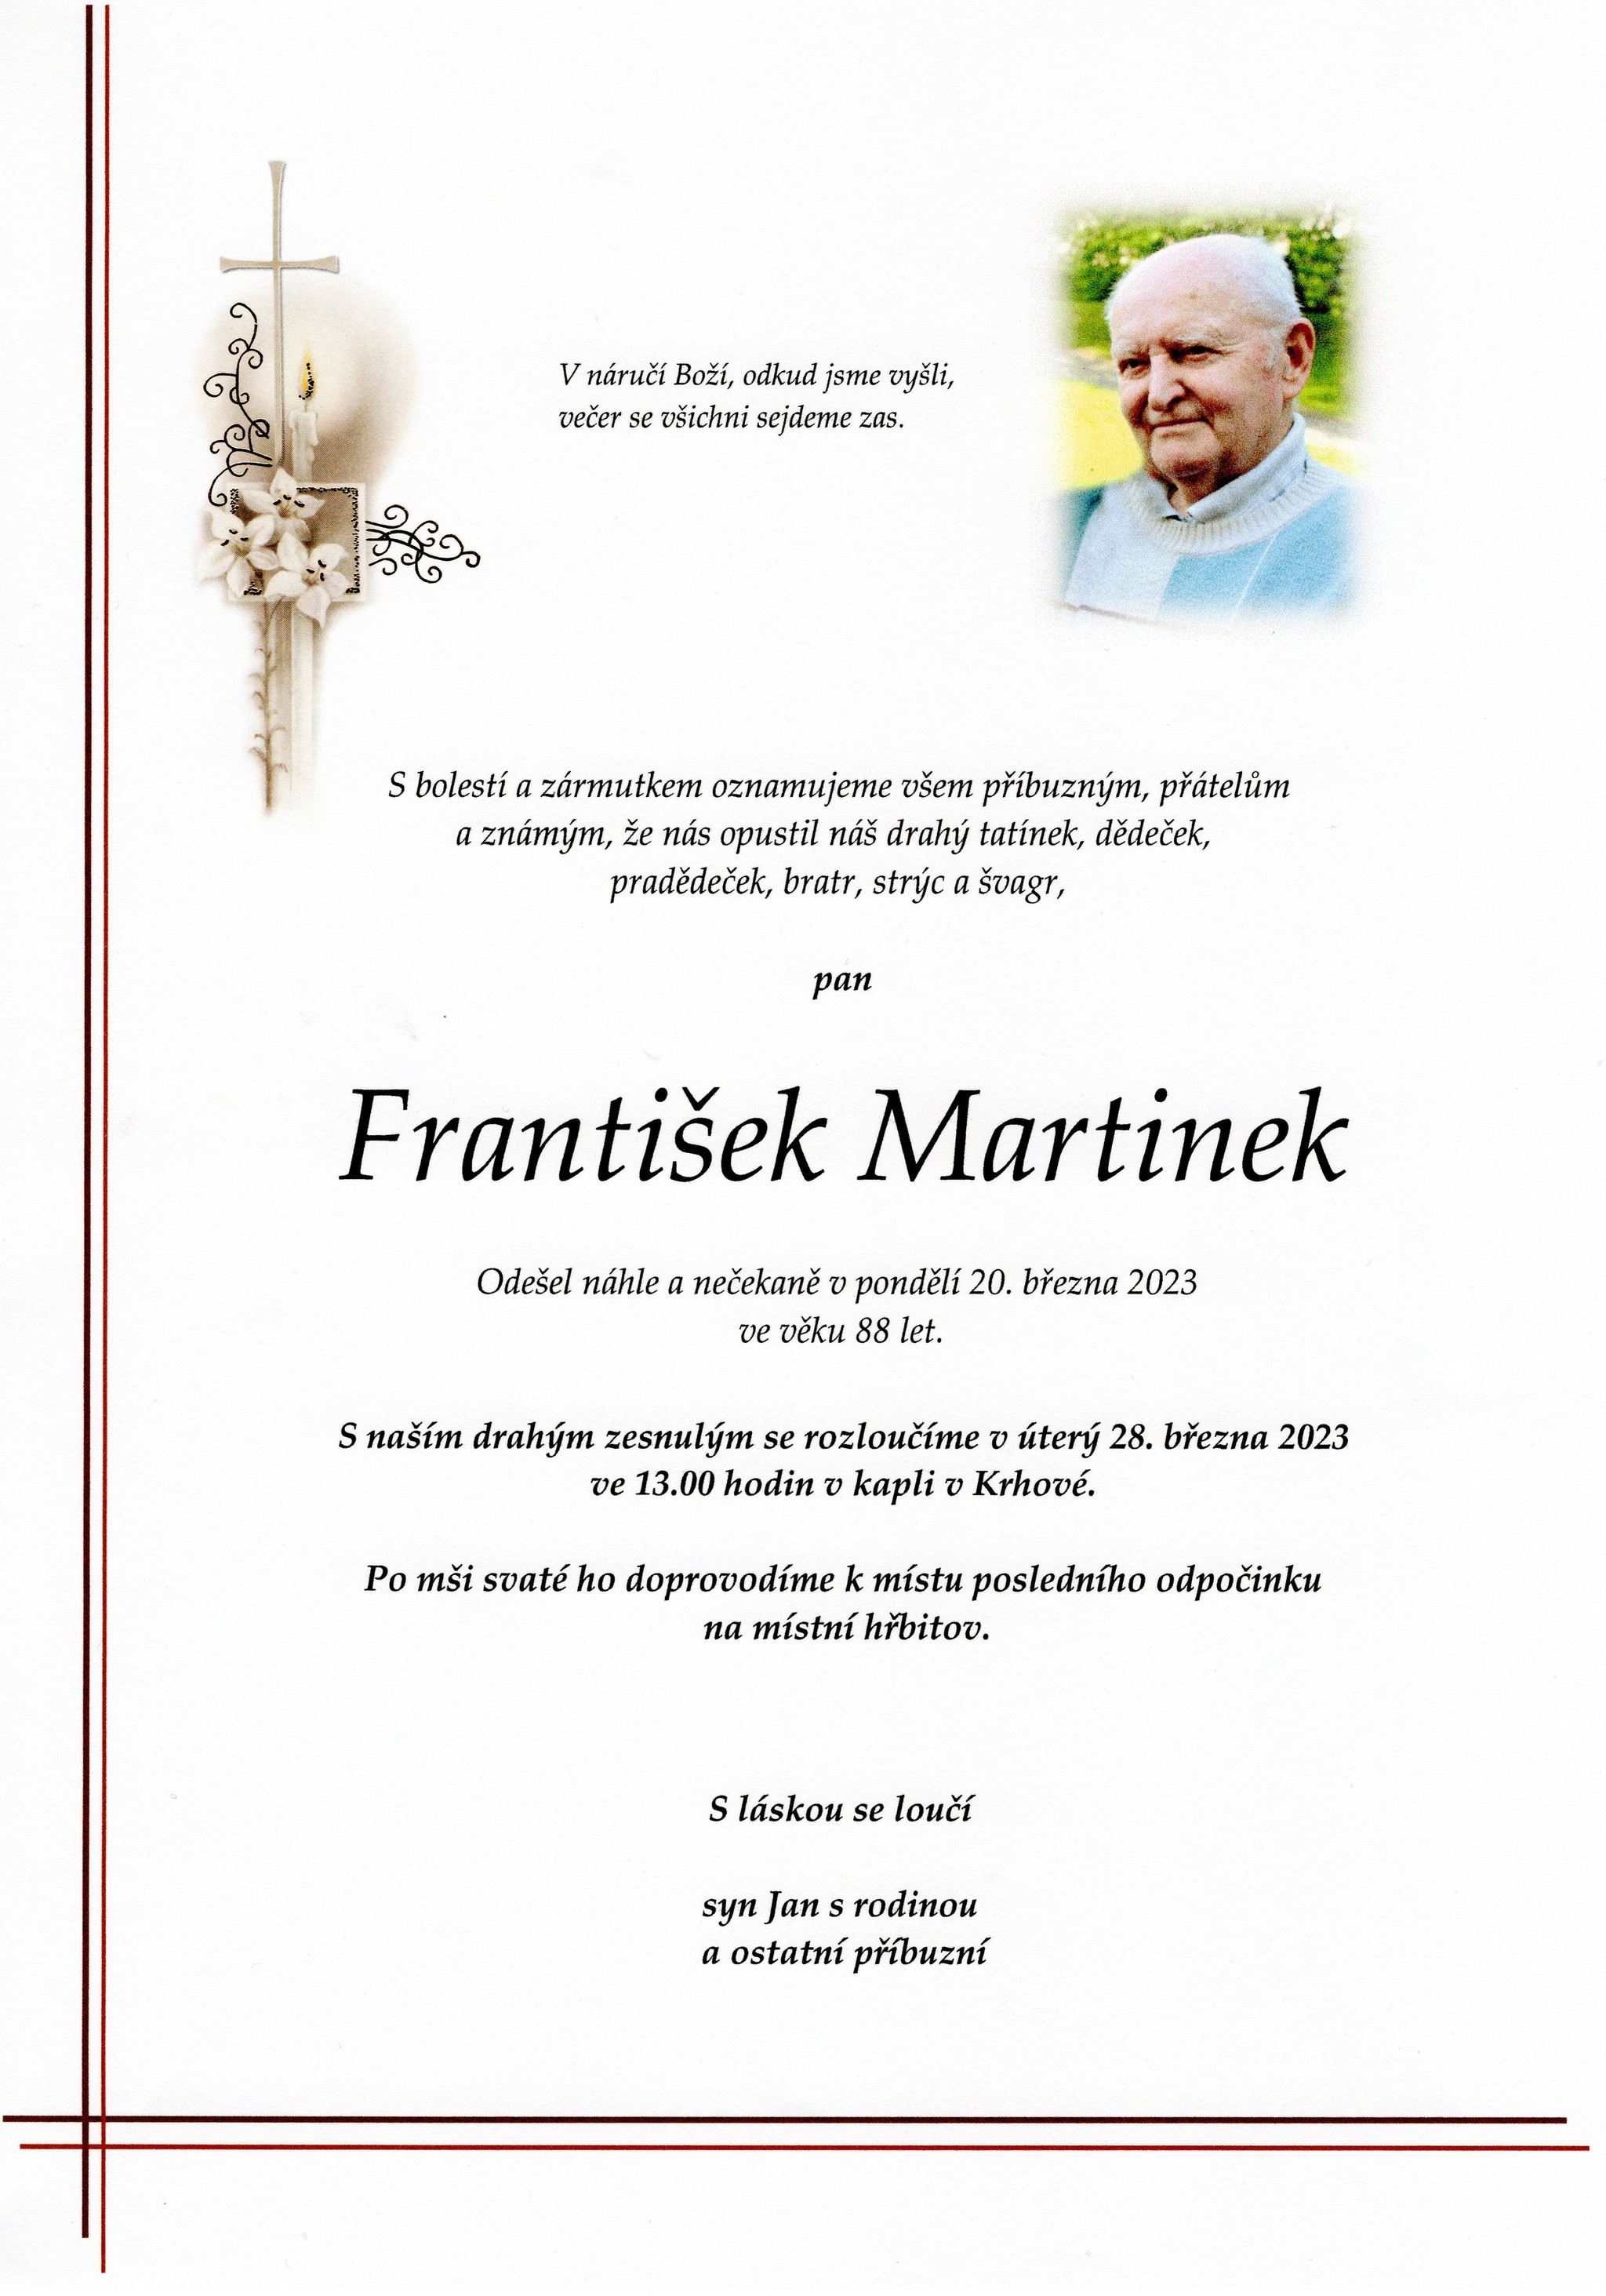 František Martinek